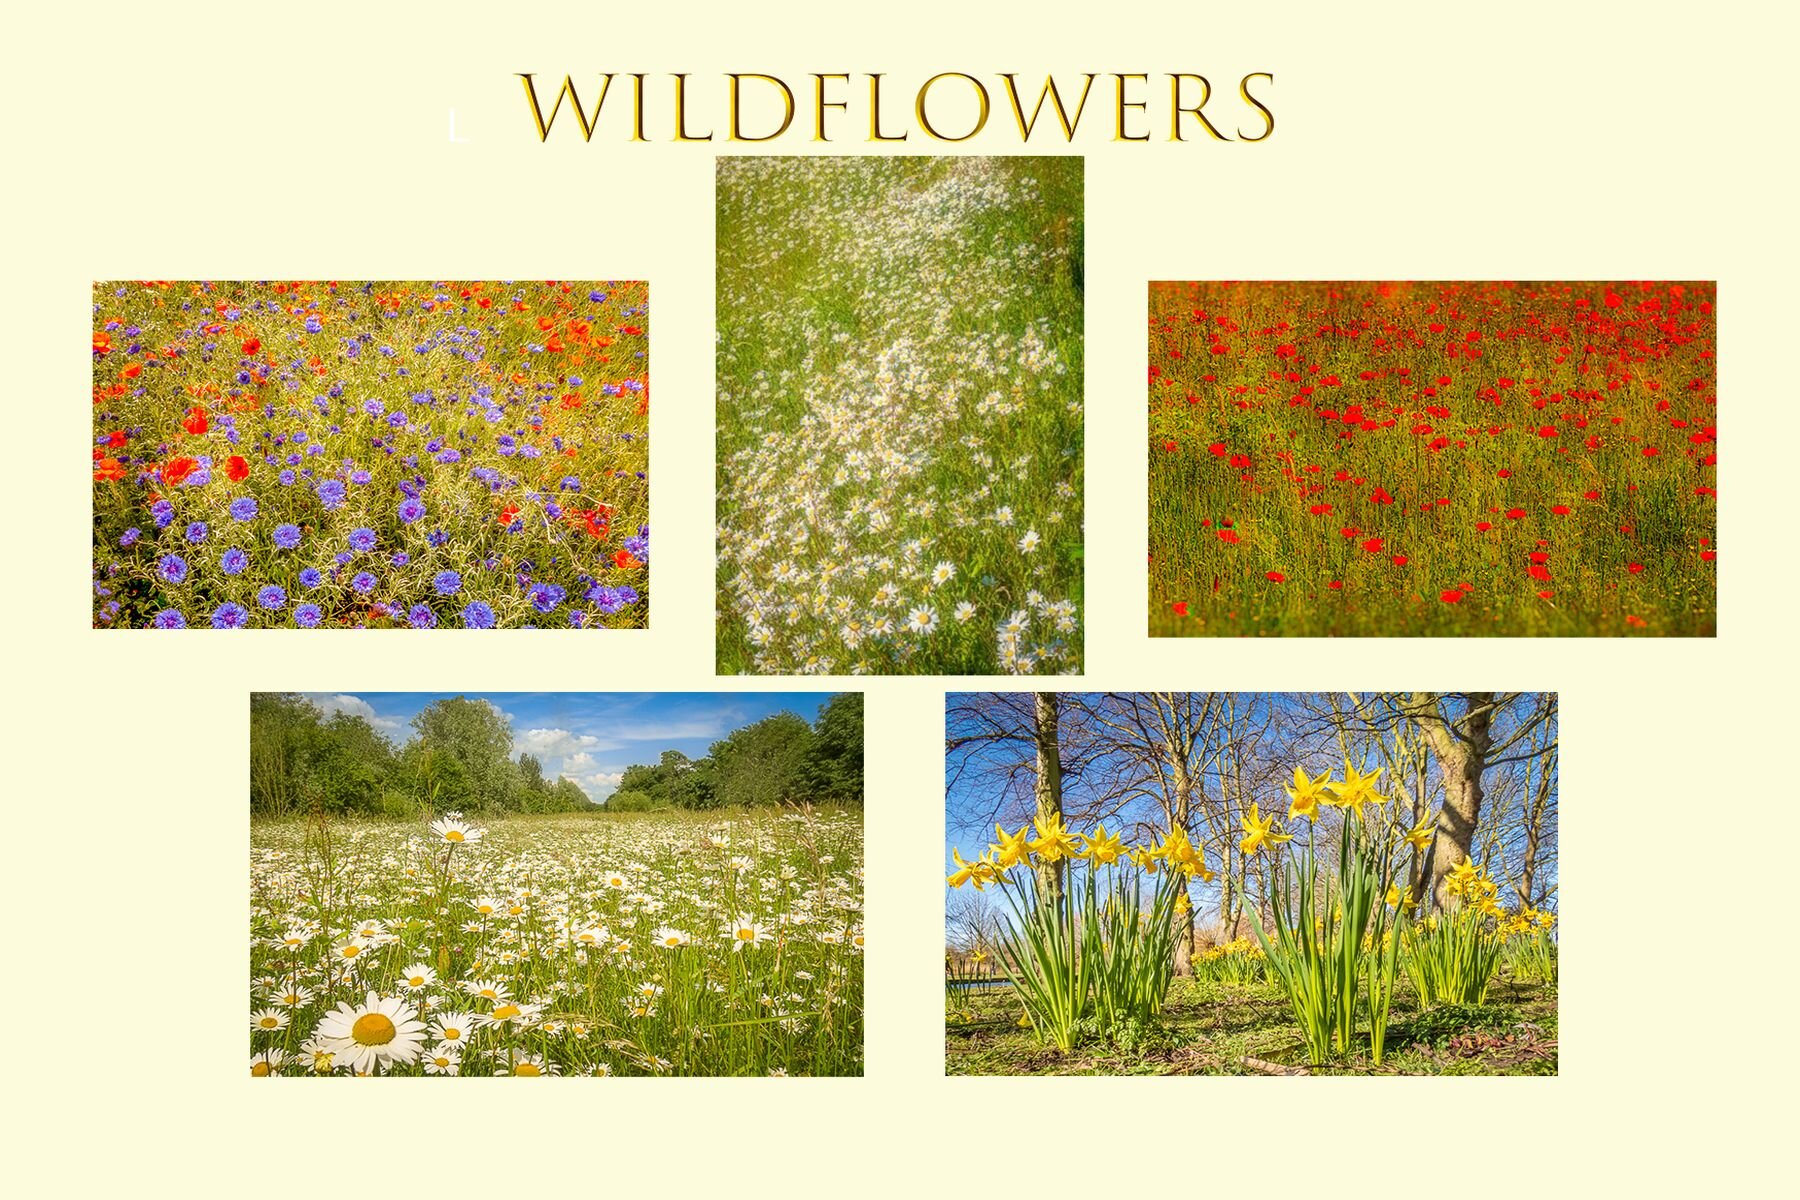 Wild Flowers 2 Postcard Insert Template.jpg